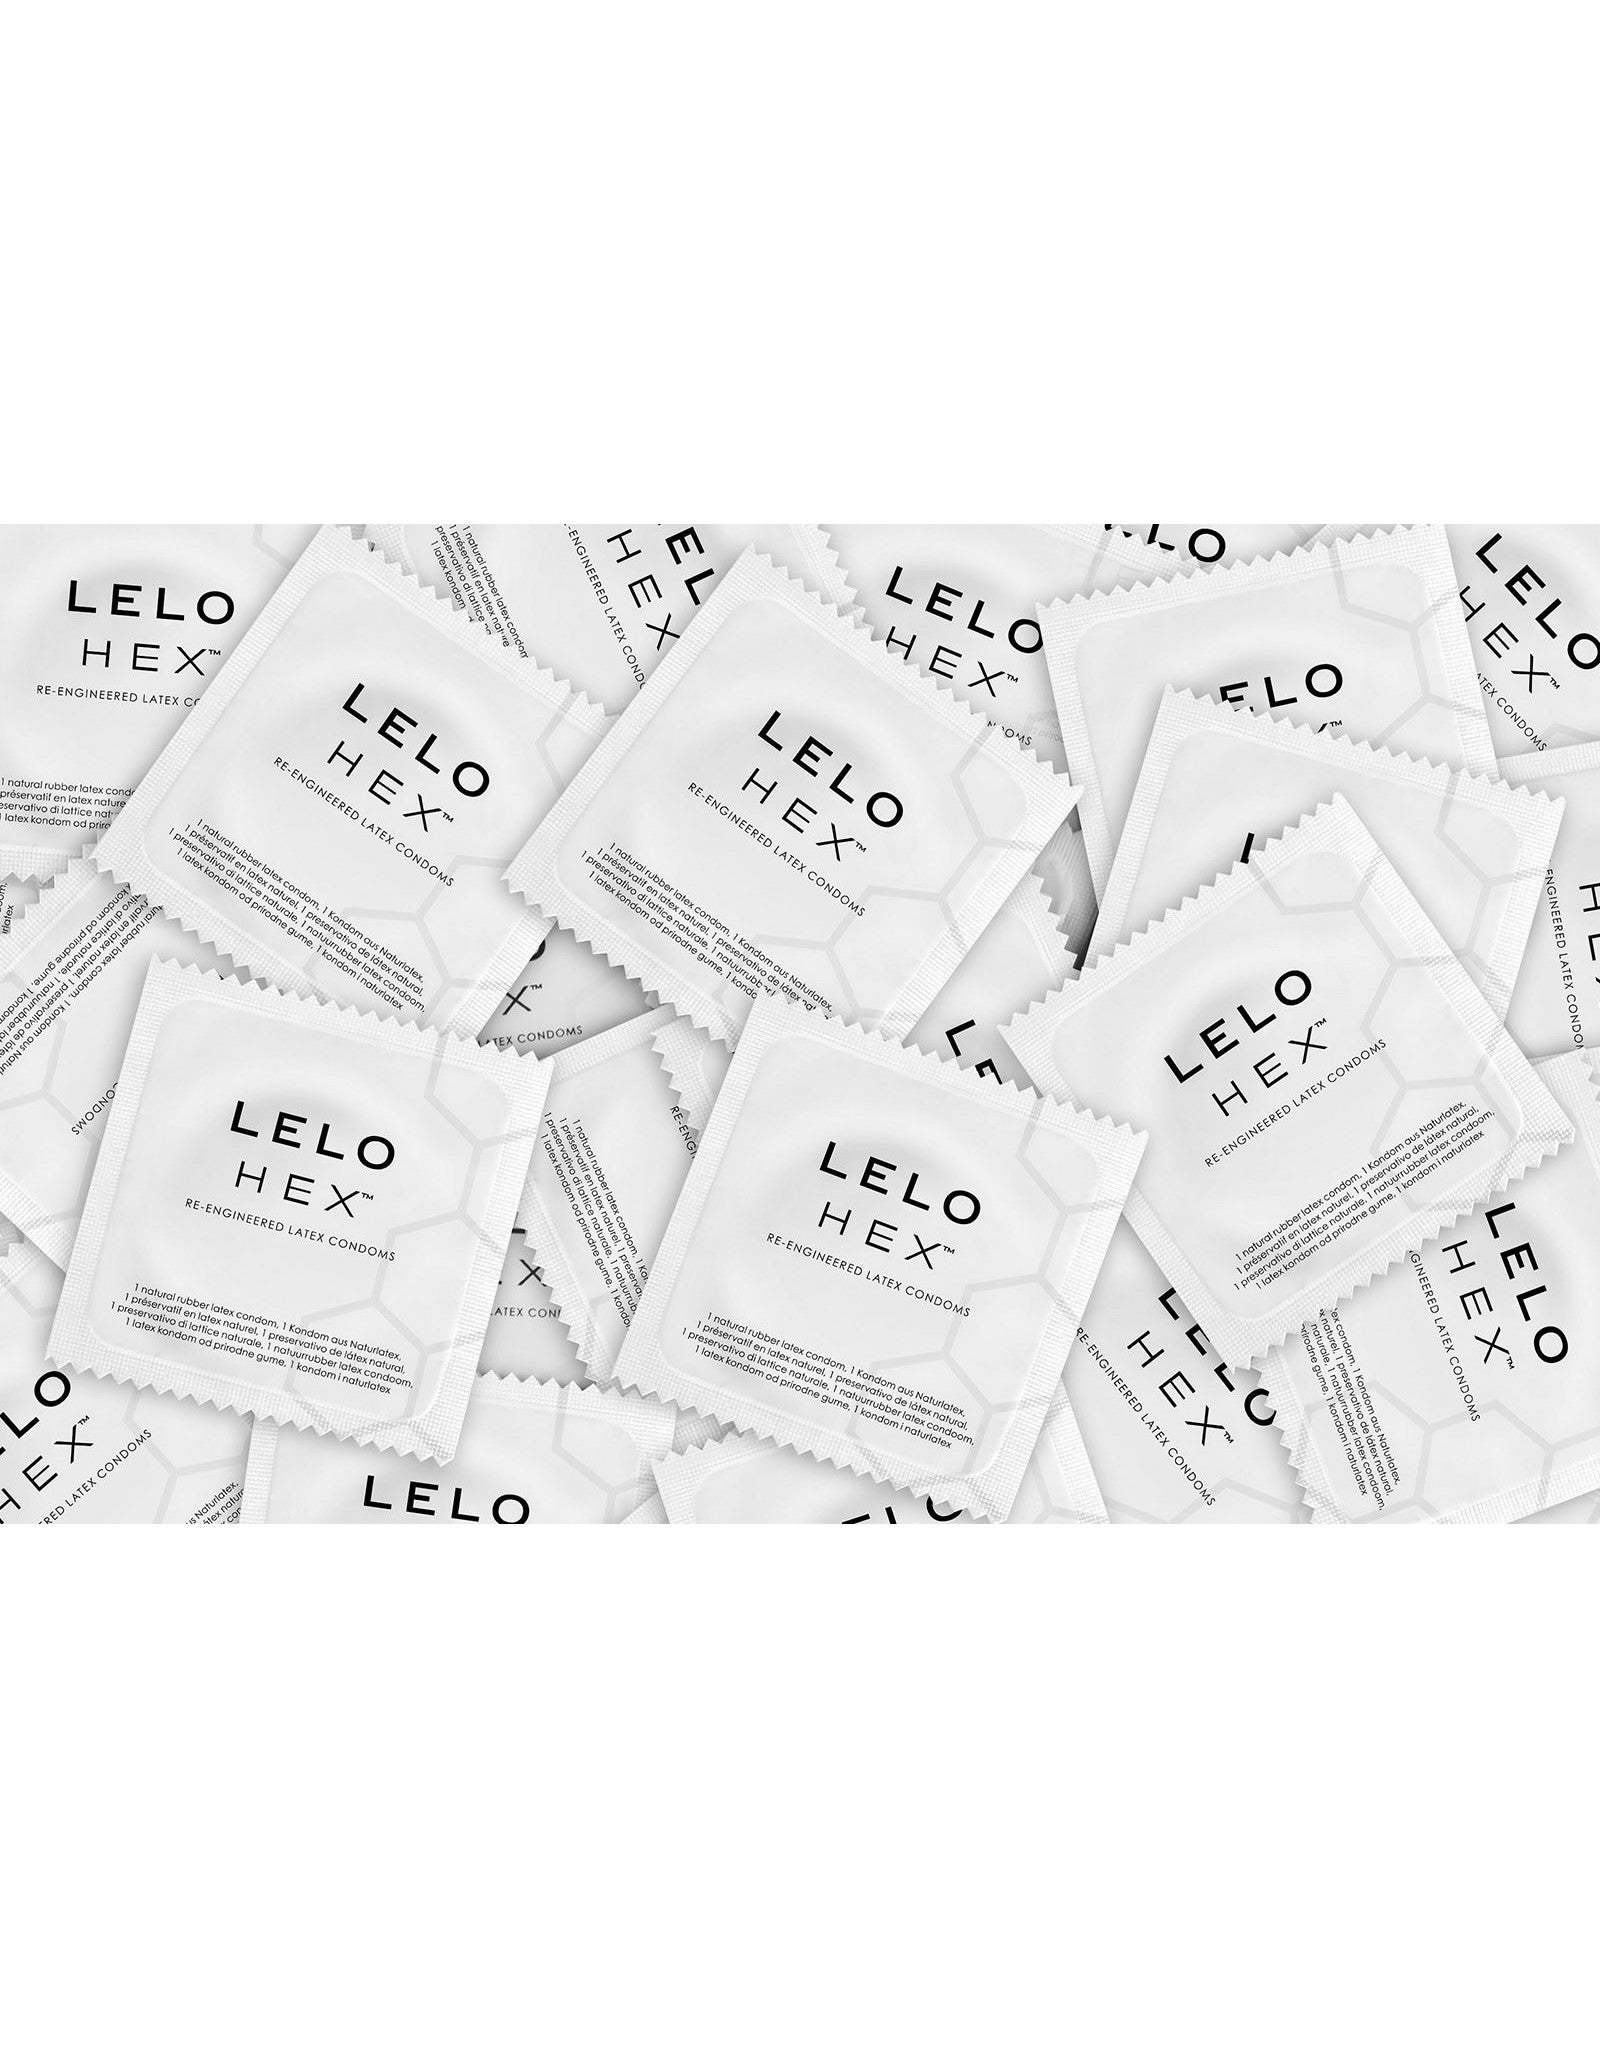 LELO_hex_kondom_originals_promo